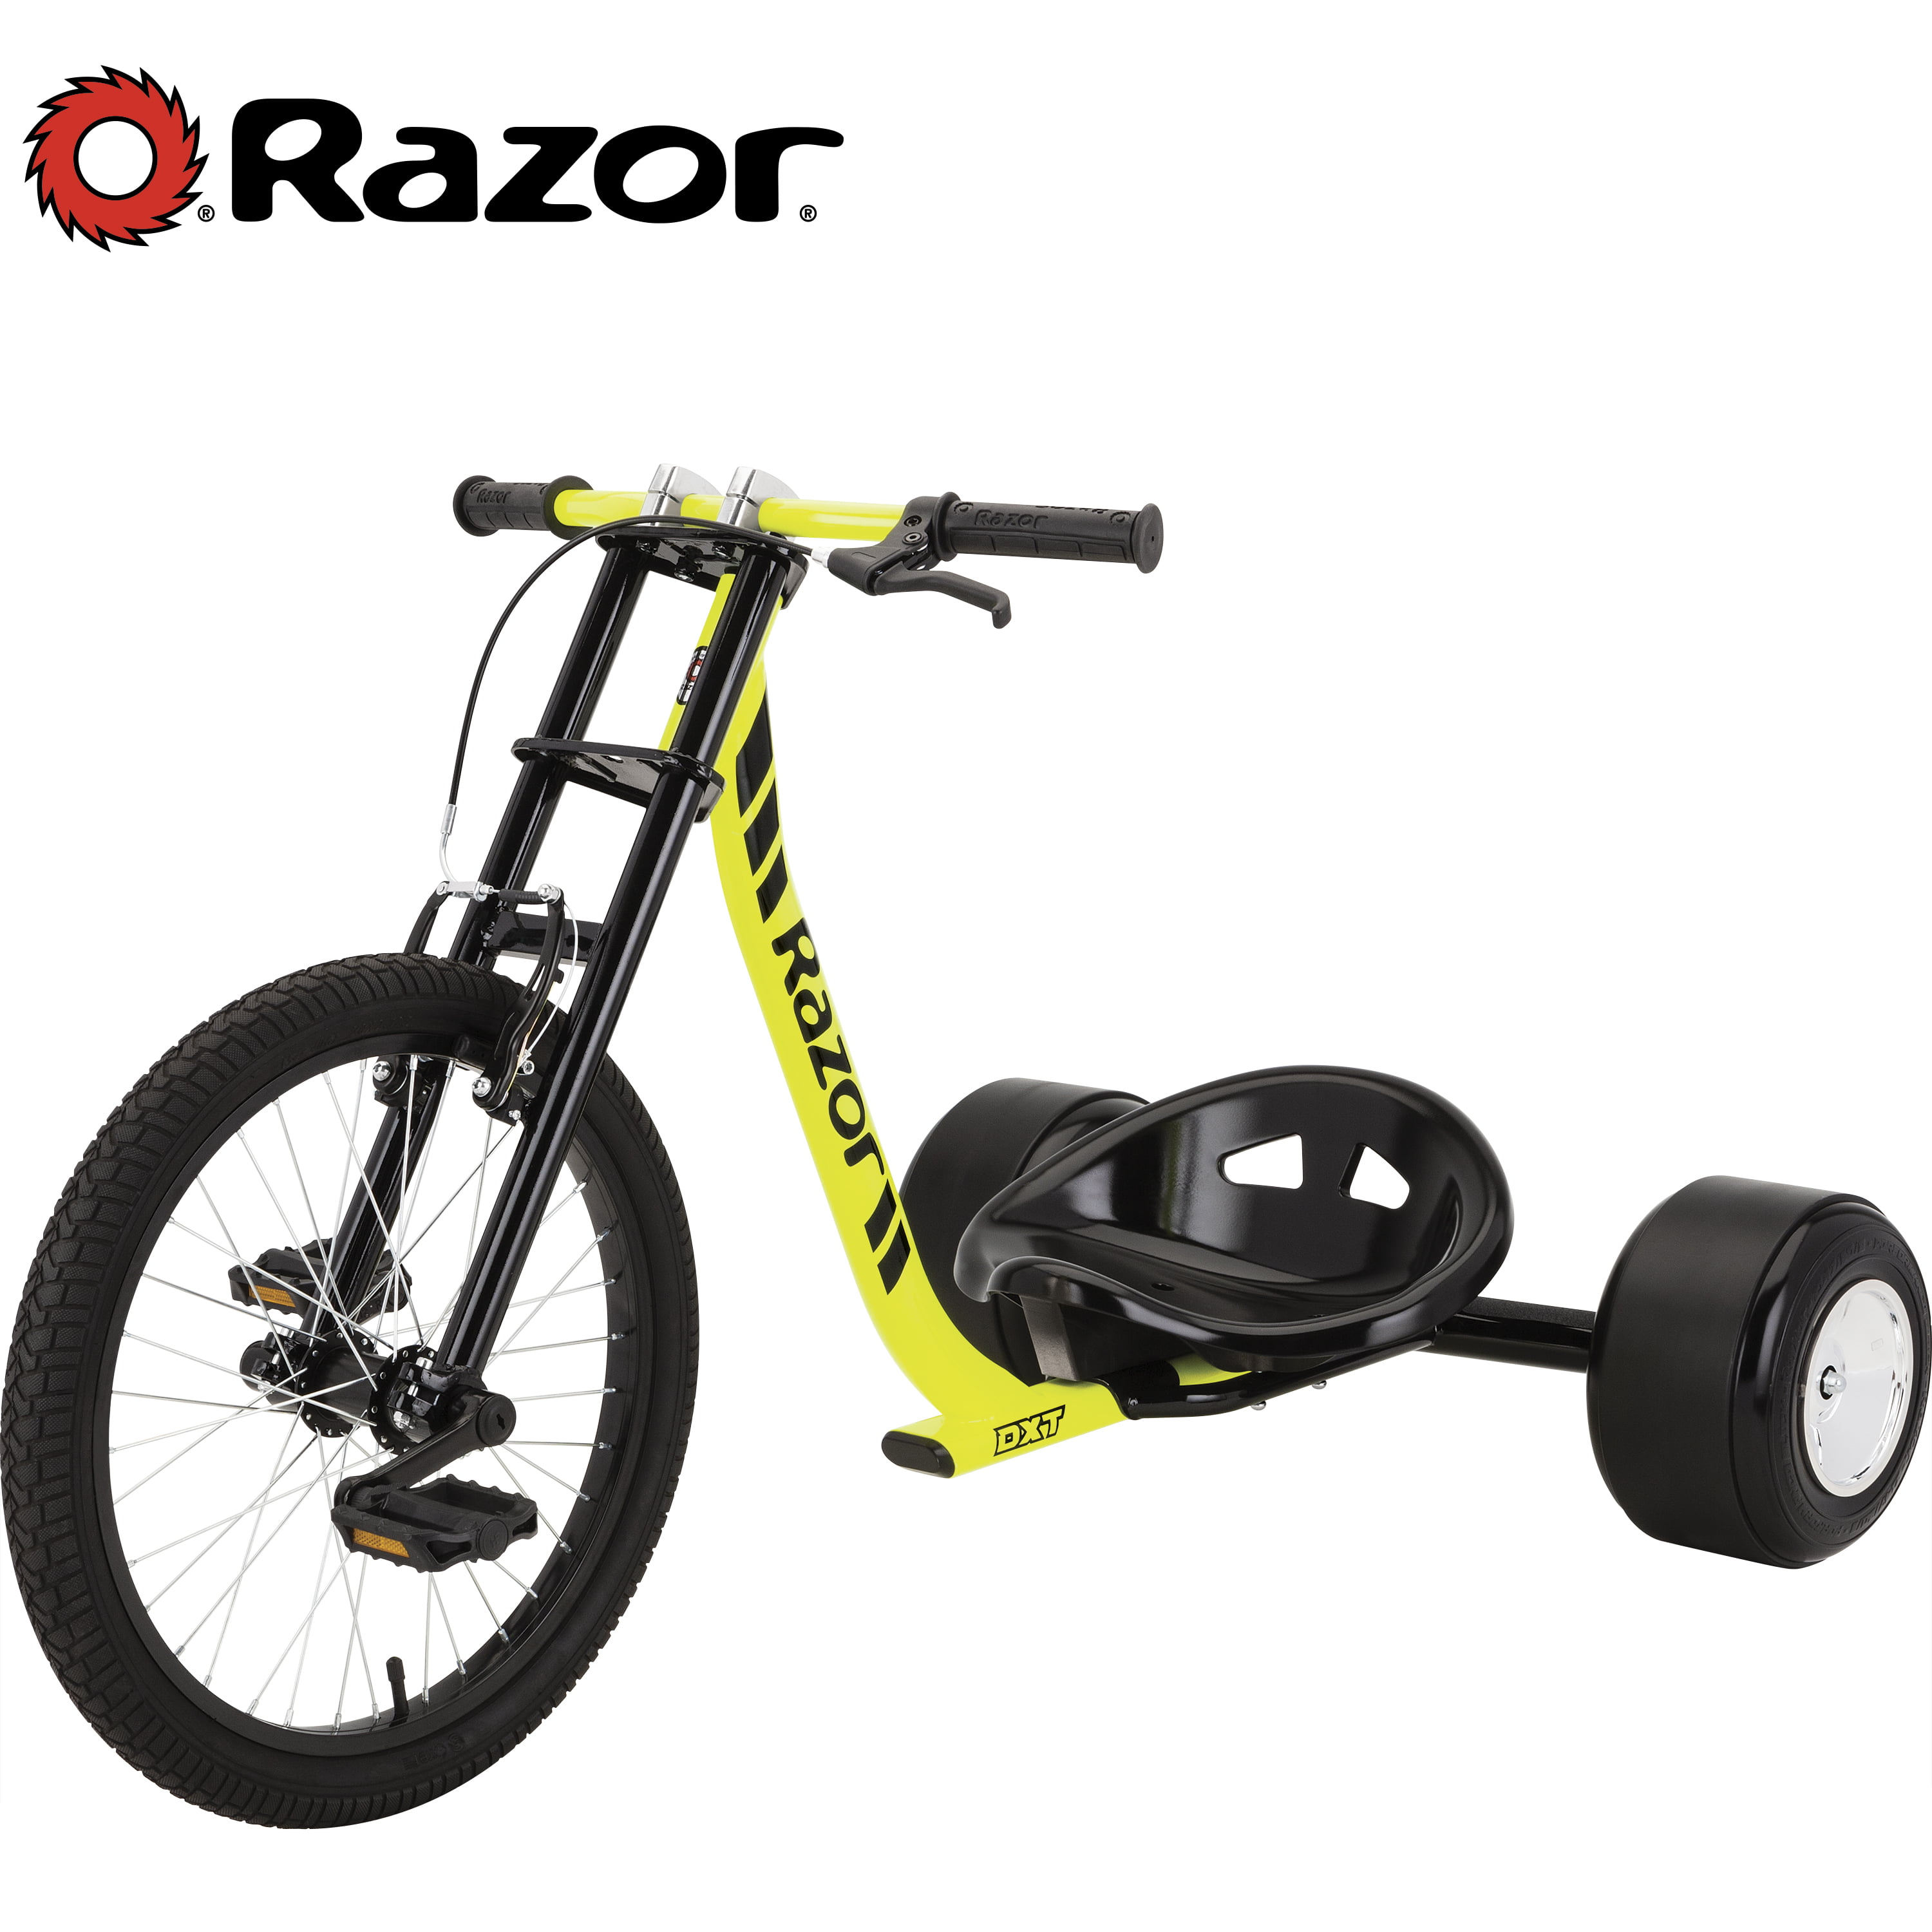 3 wheel razor bike